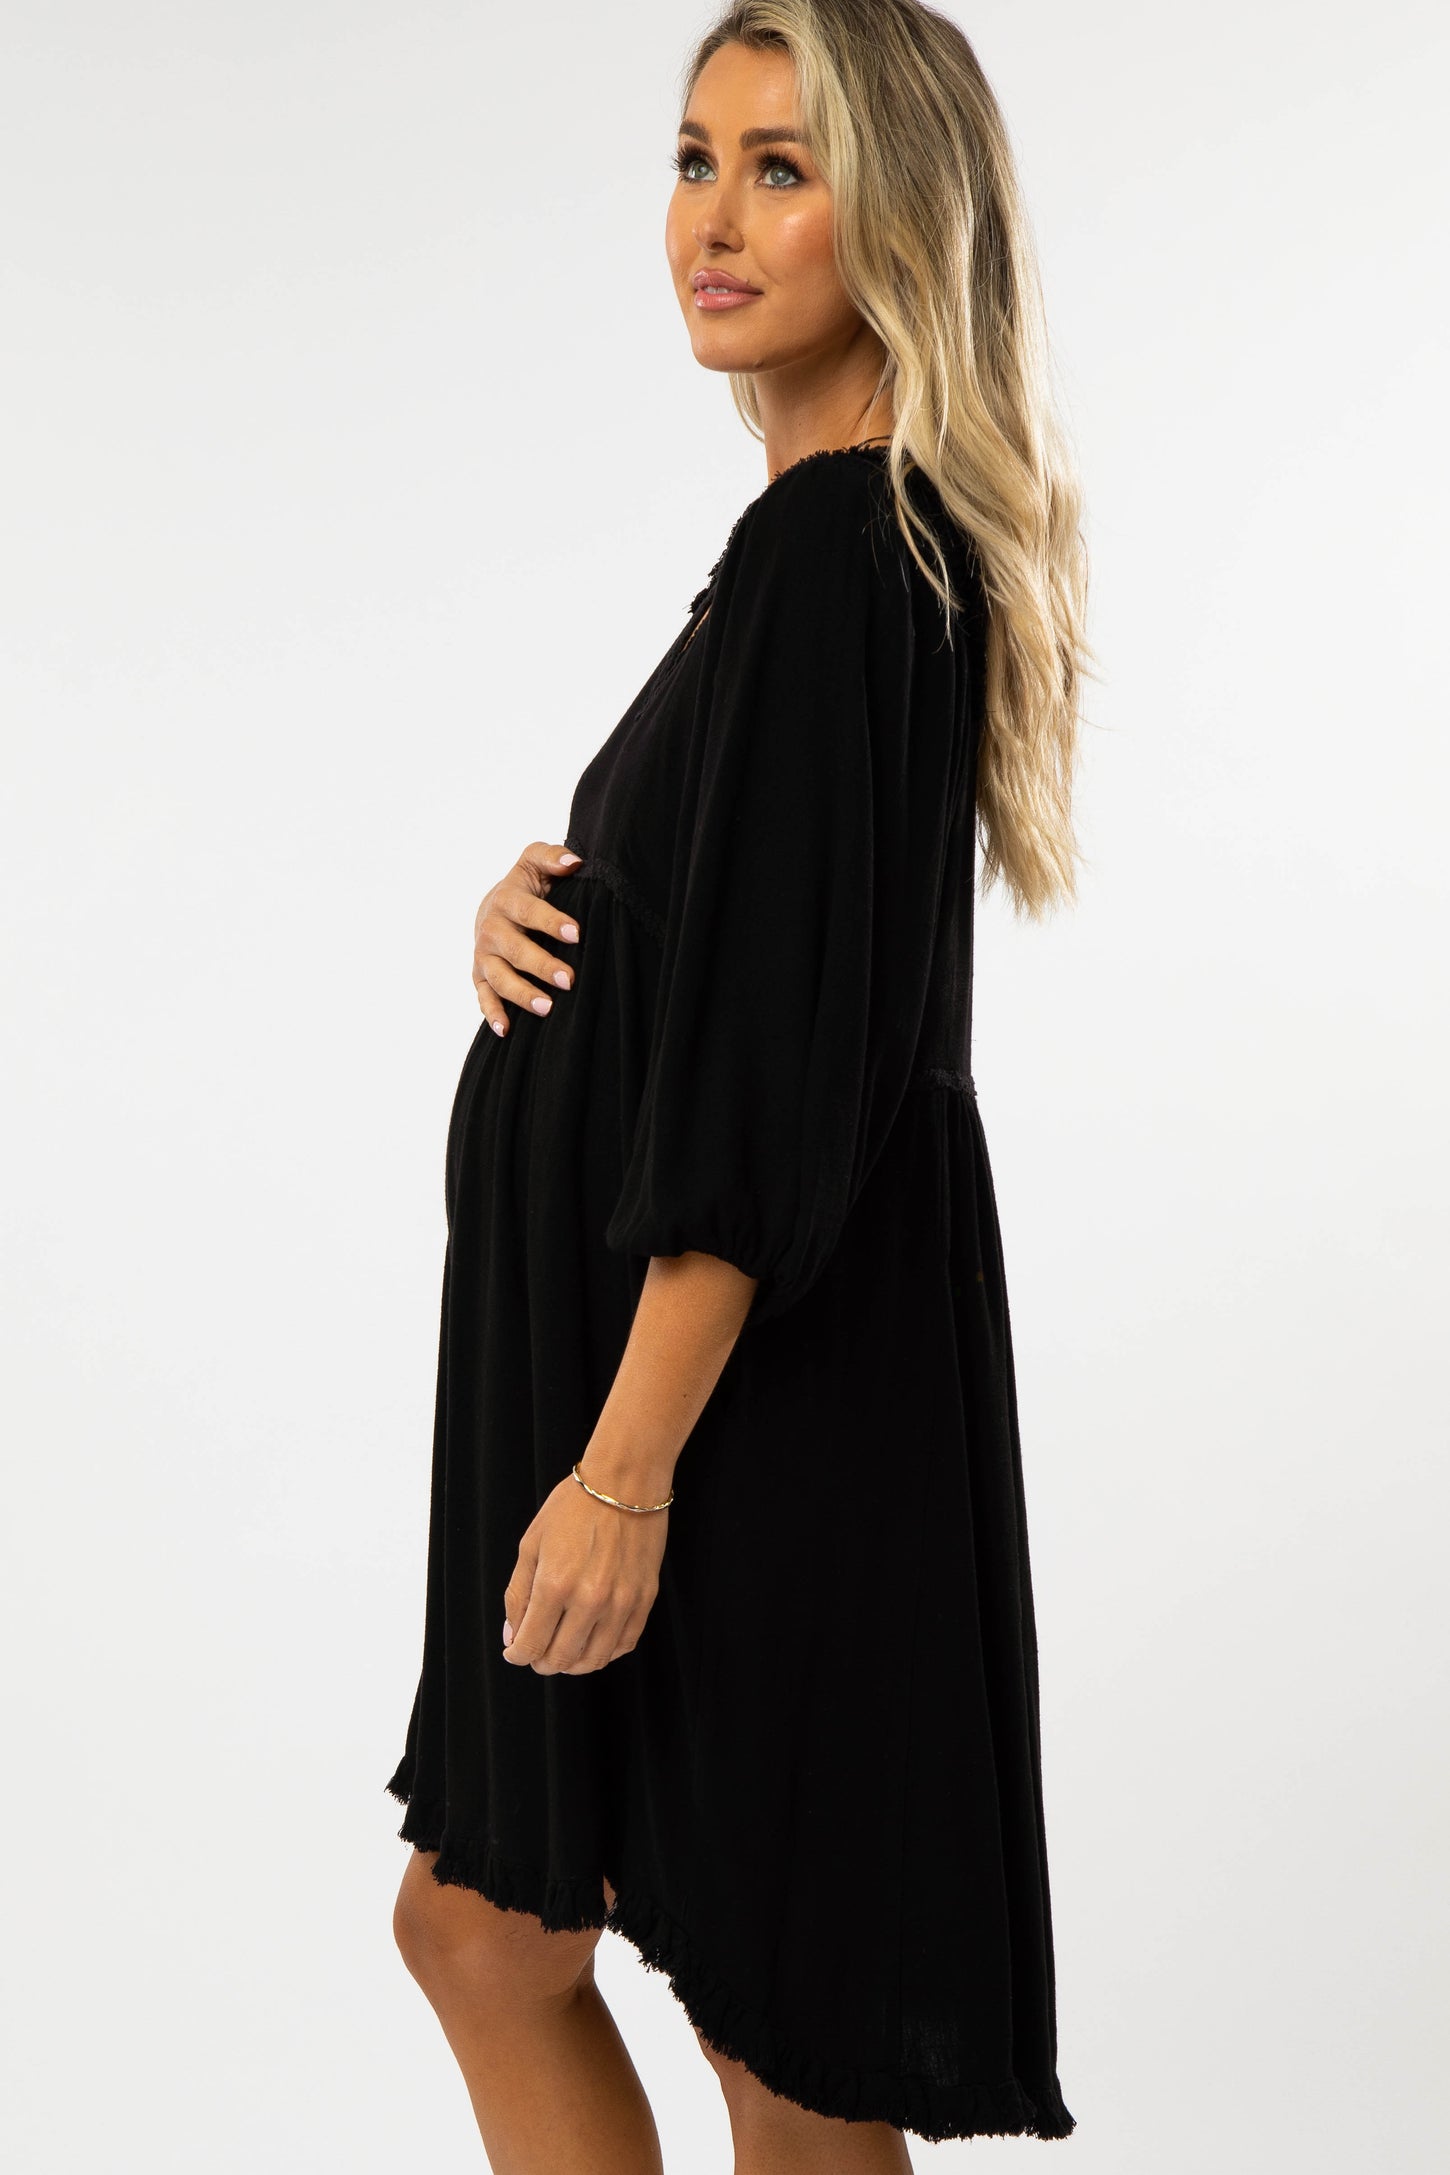 Black Linen Raw Edge Hi-Low Hem Maternity Dress